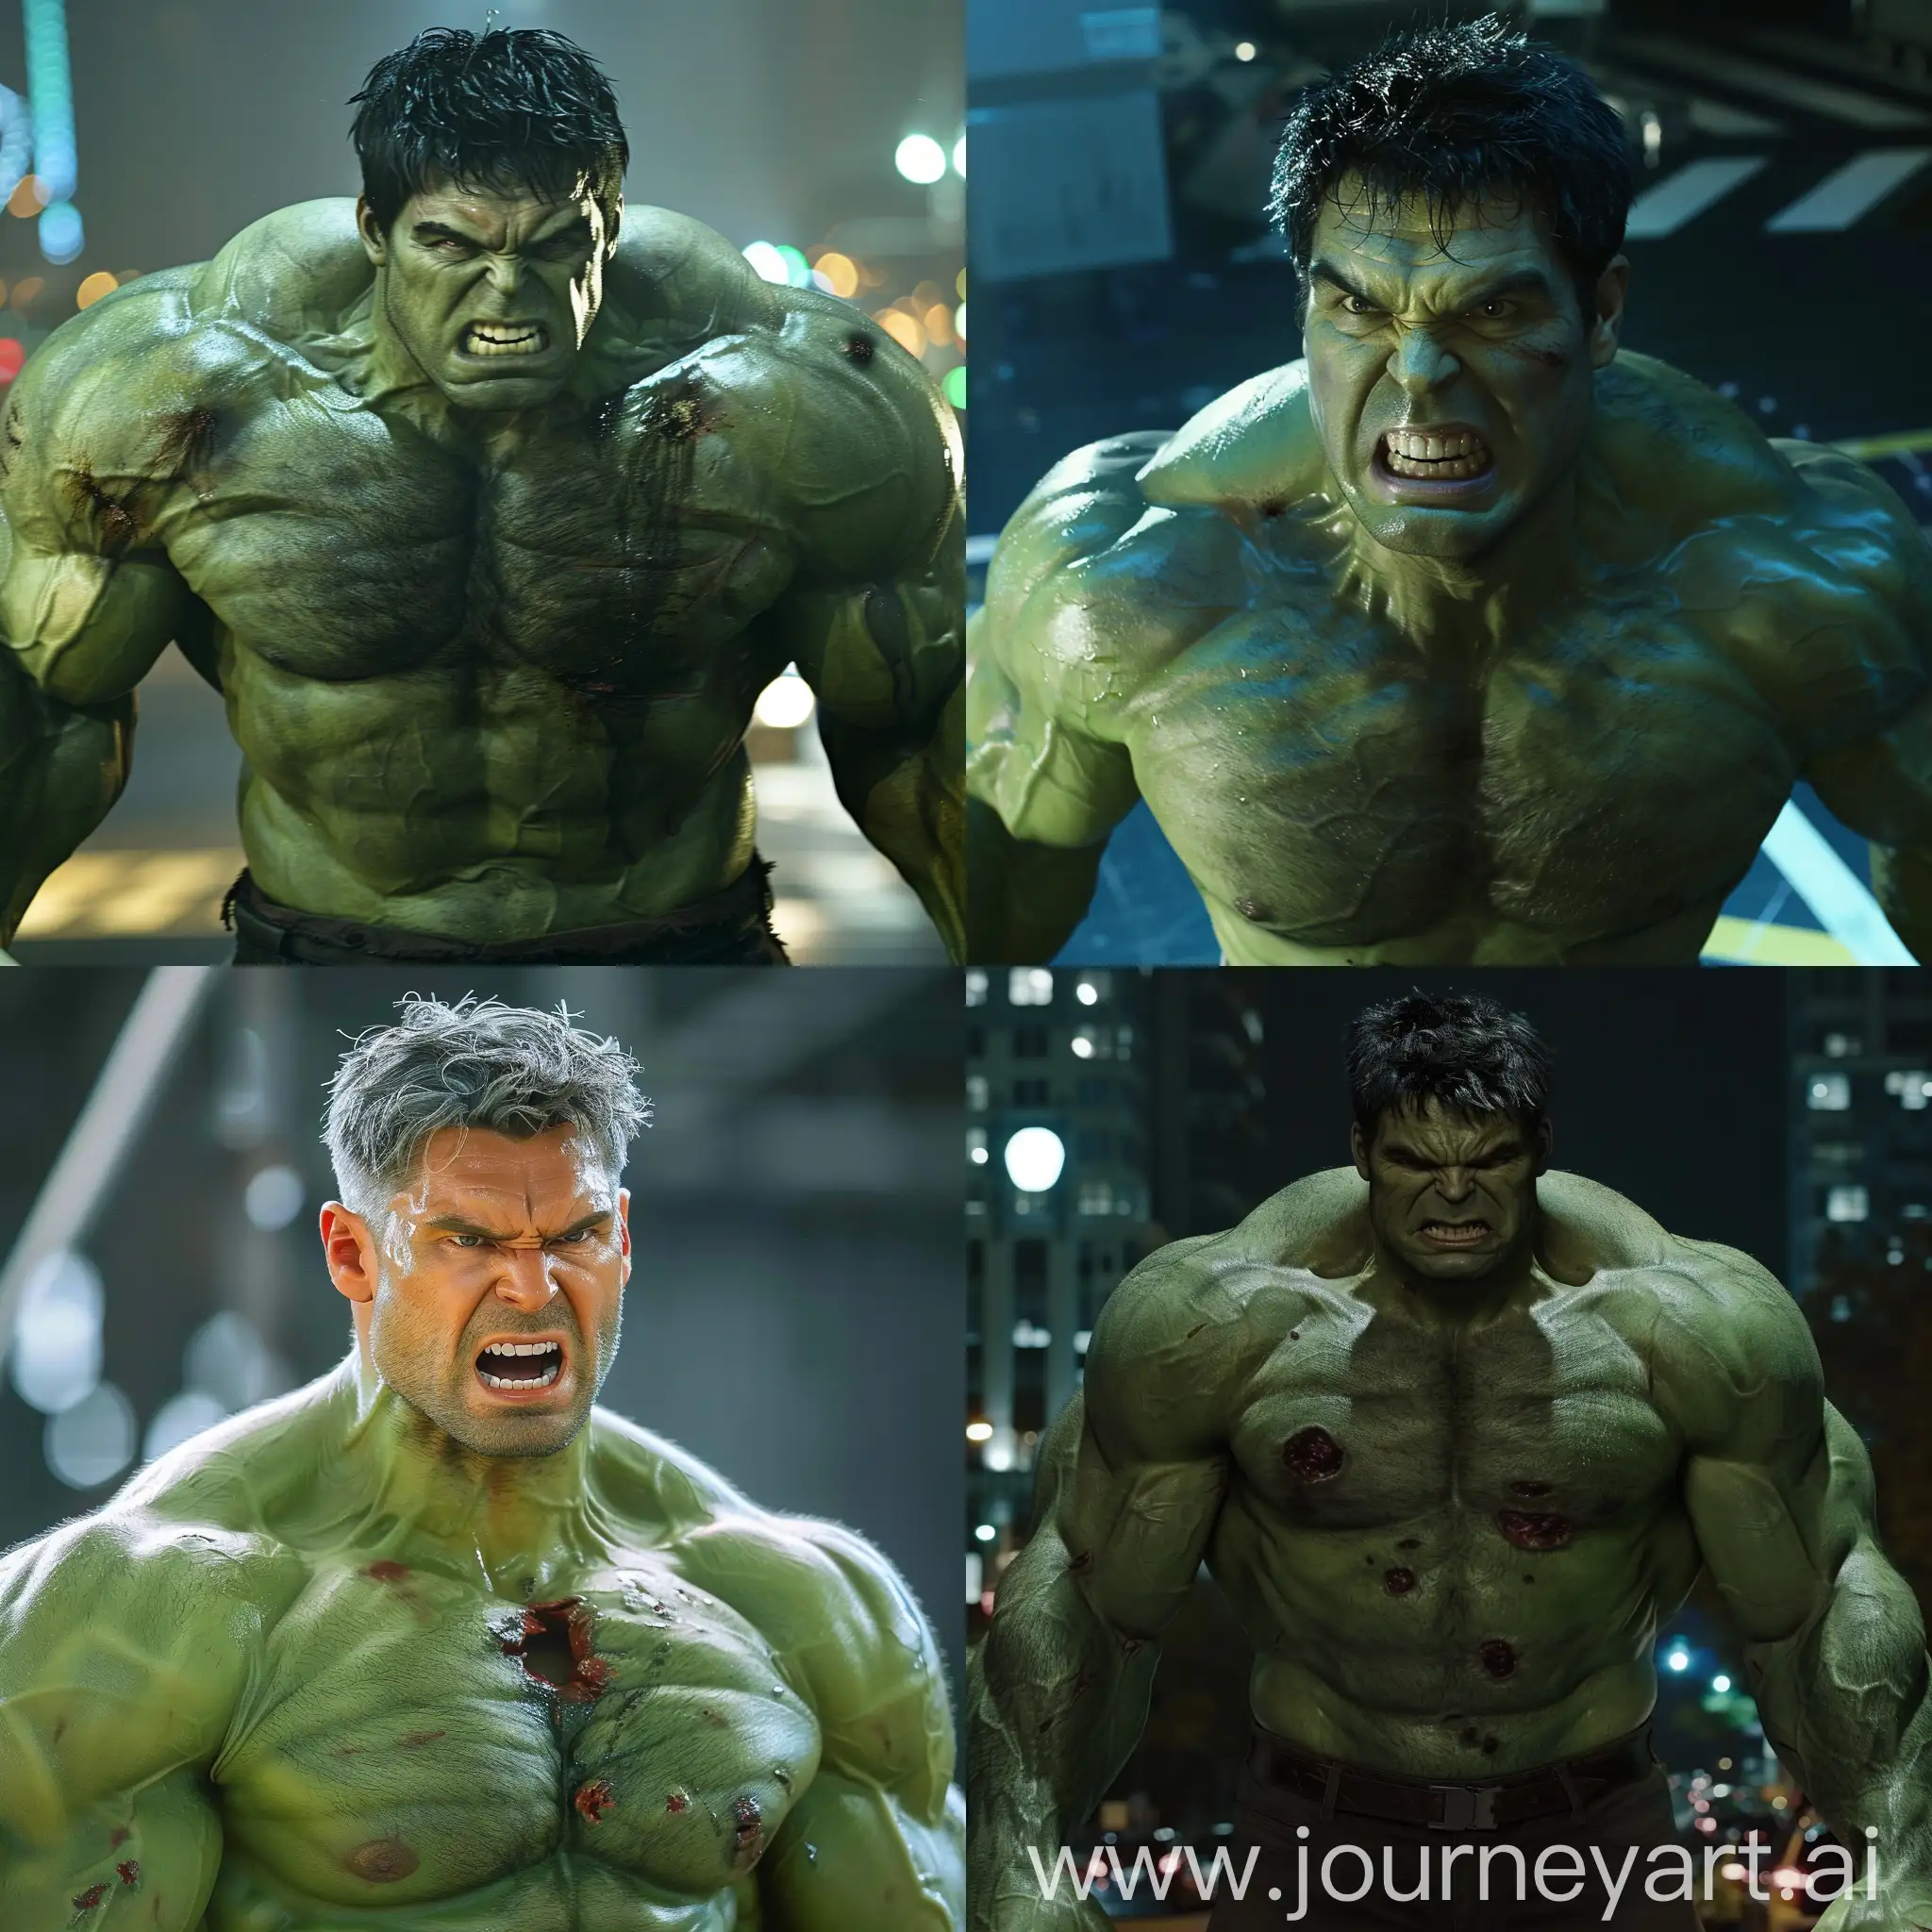 The Hulk played by actor Eric Bana --cref https://i.pinimg.com/originals/1a/6e/28/1a6e28bbb1d7a33ef3164202d7d2d5d8.jpg --v 6 --style raw